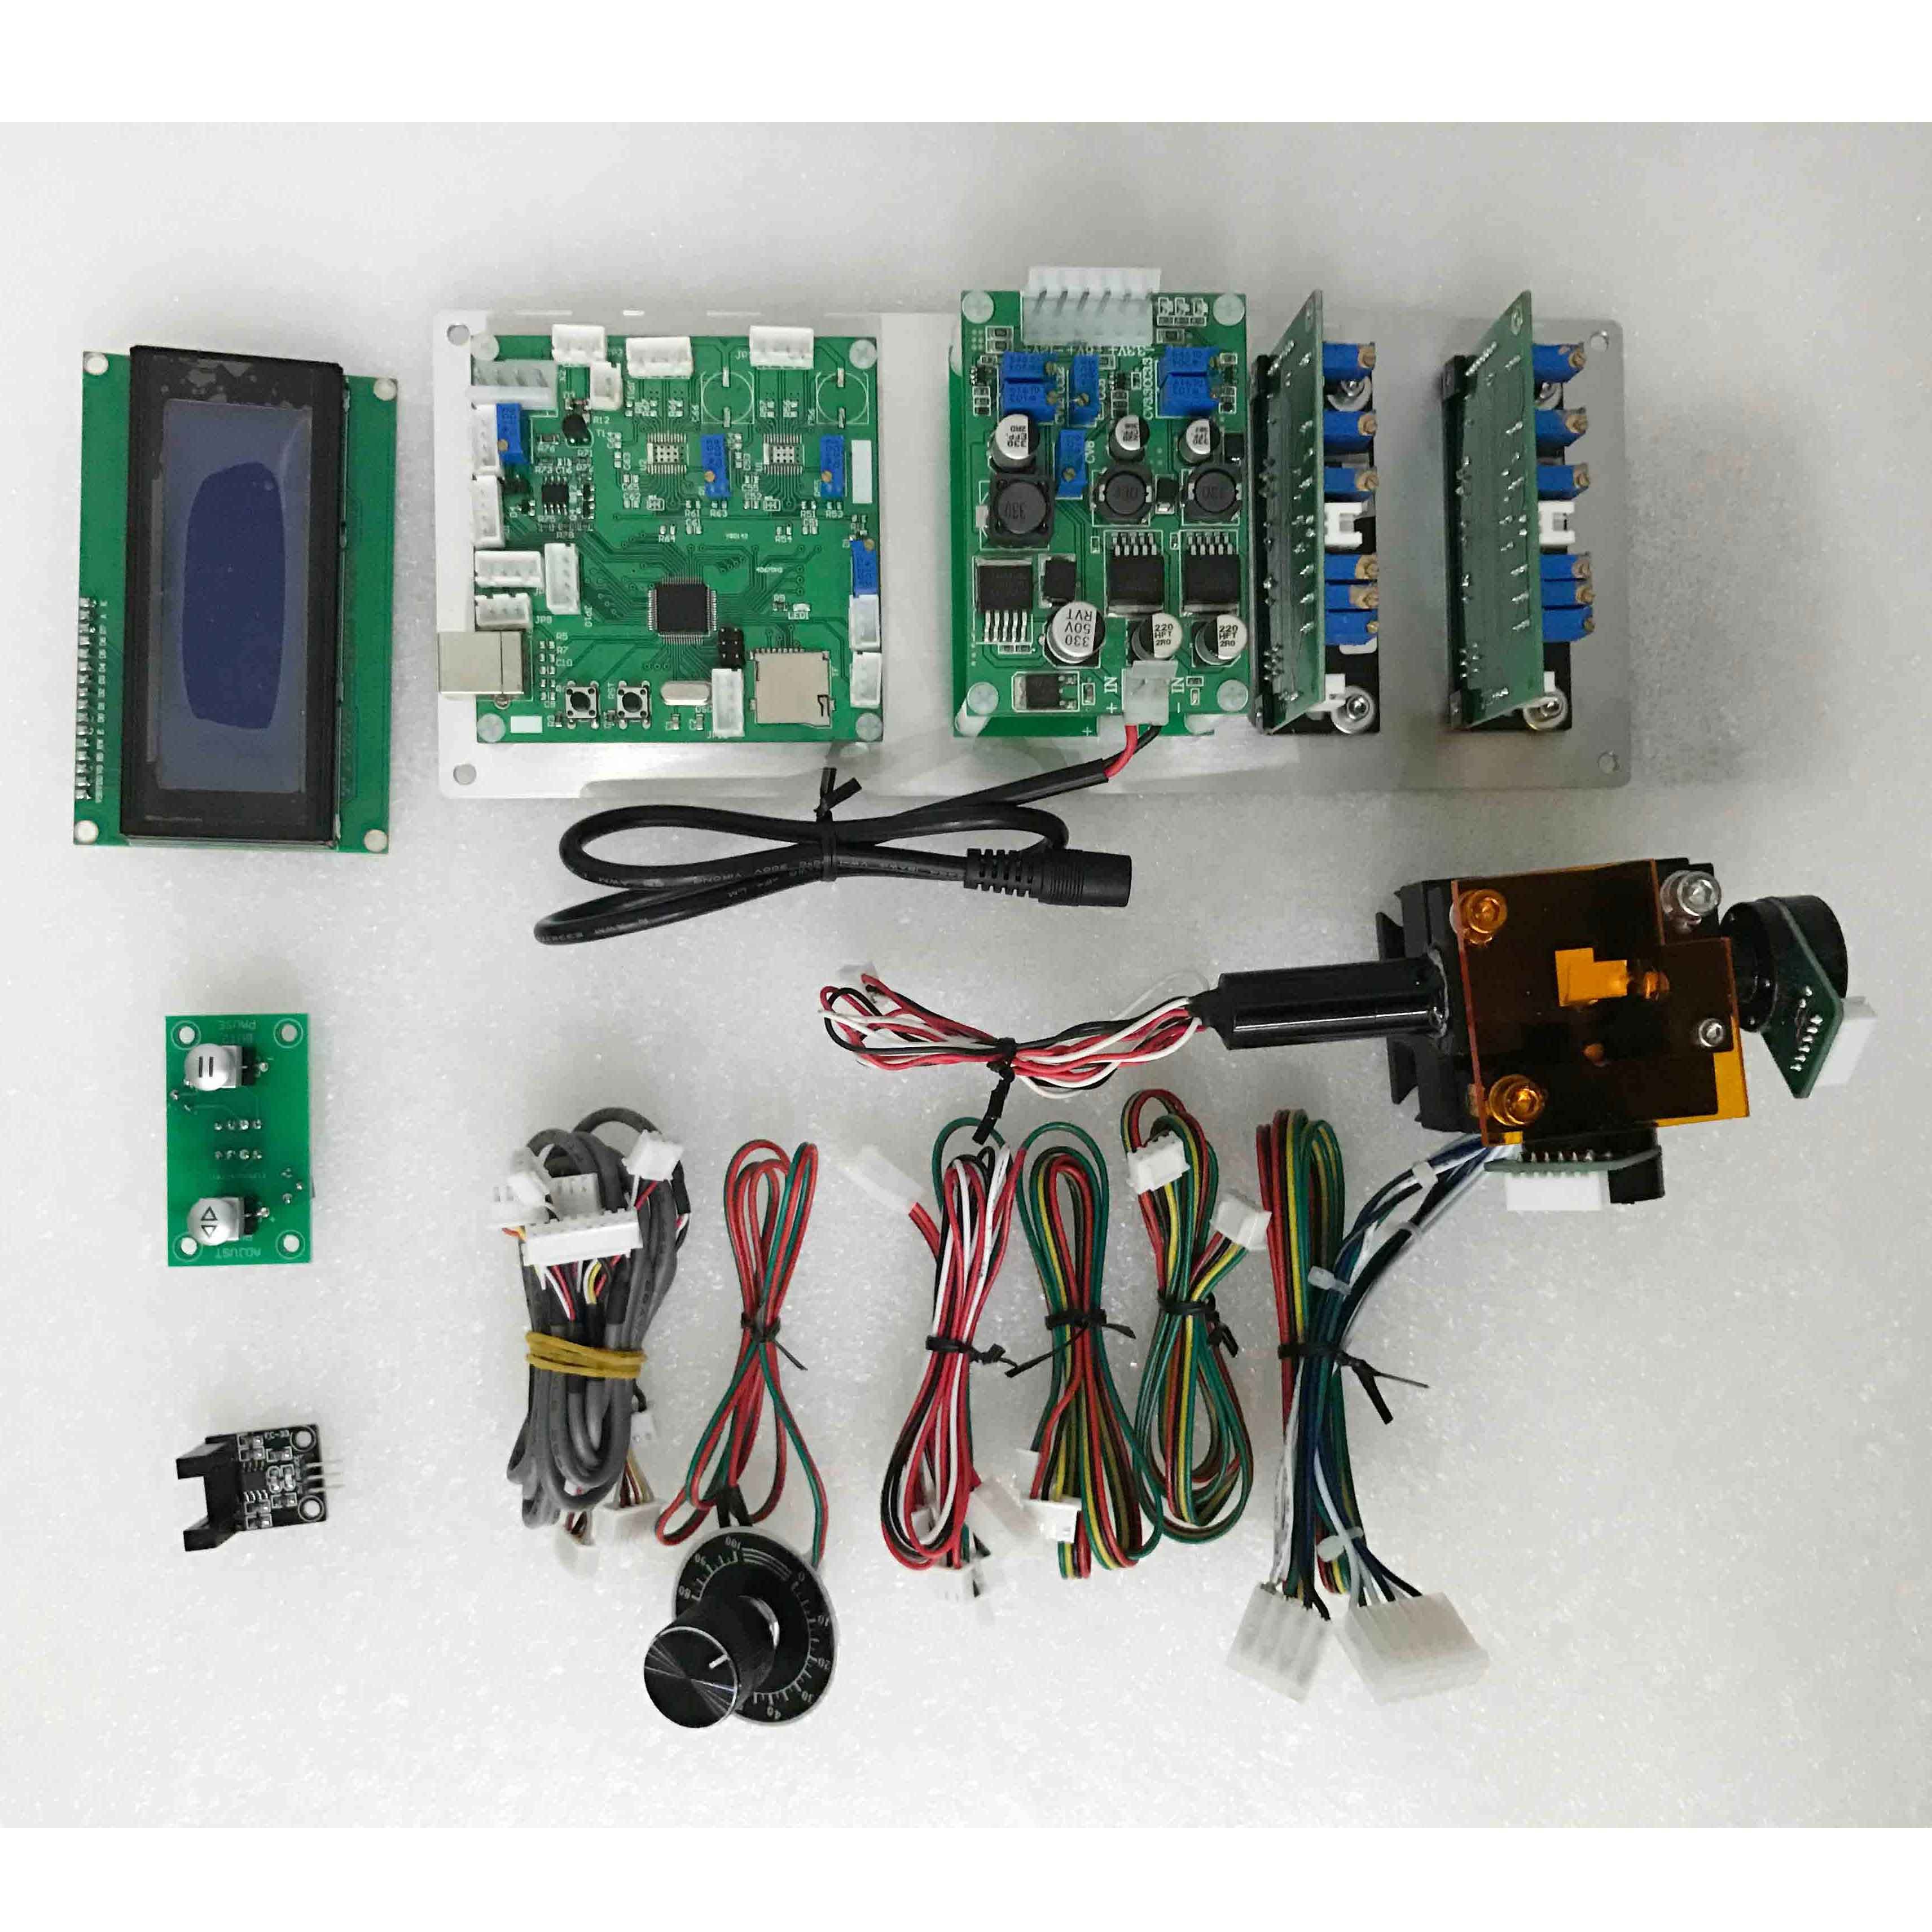 Core components for SLA 3D printers